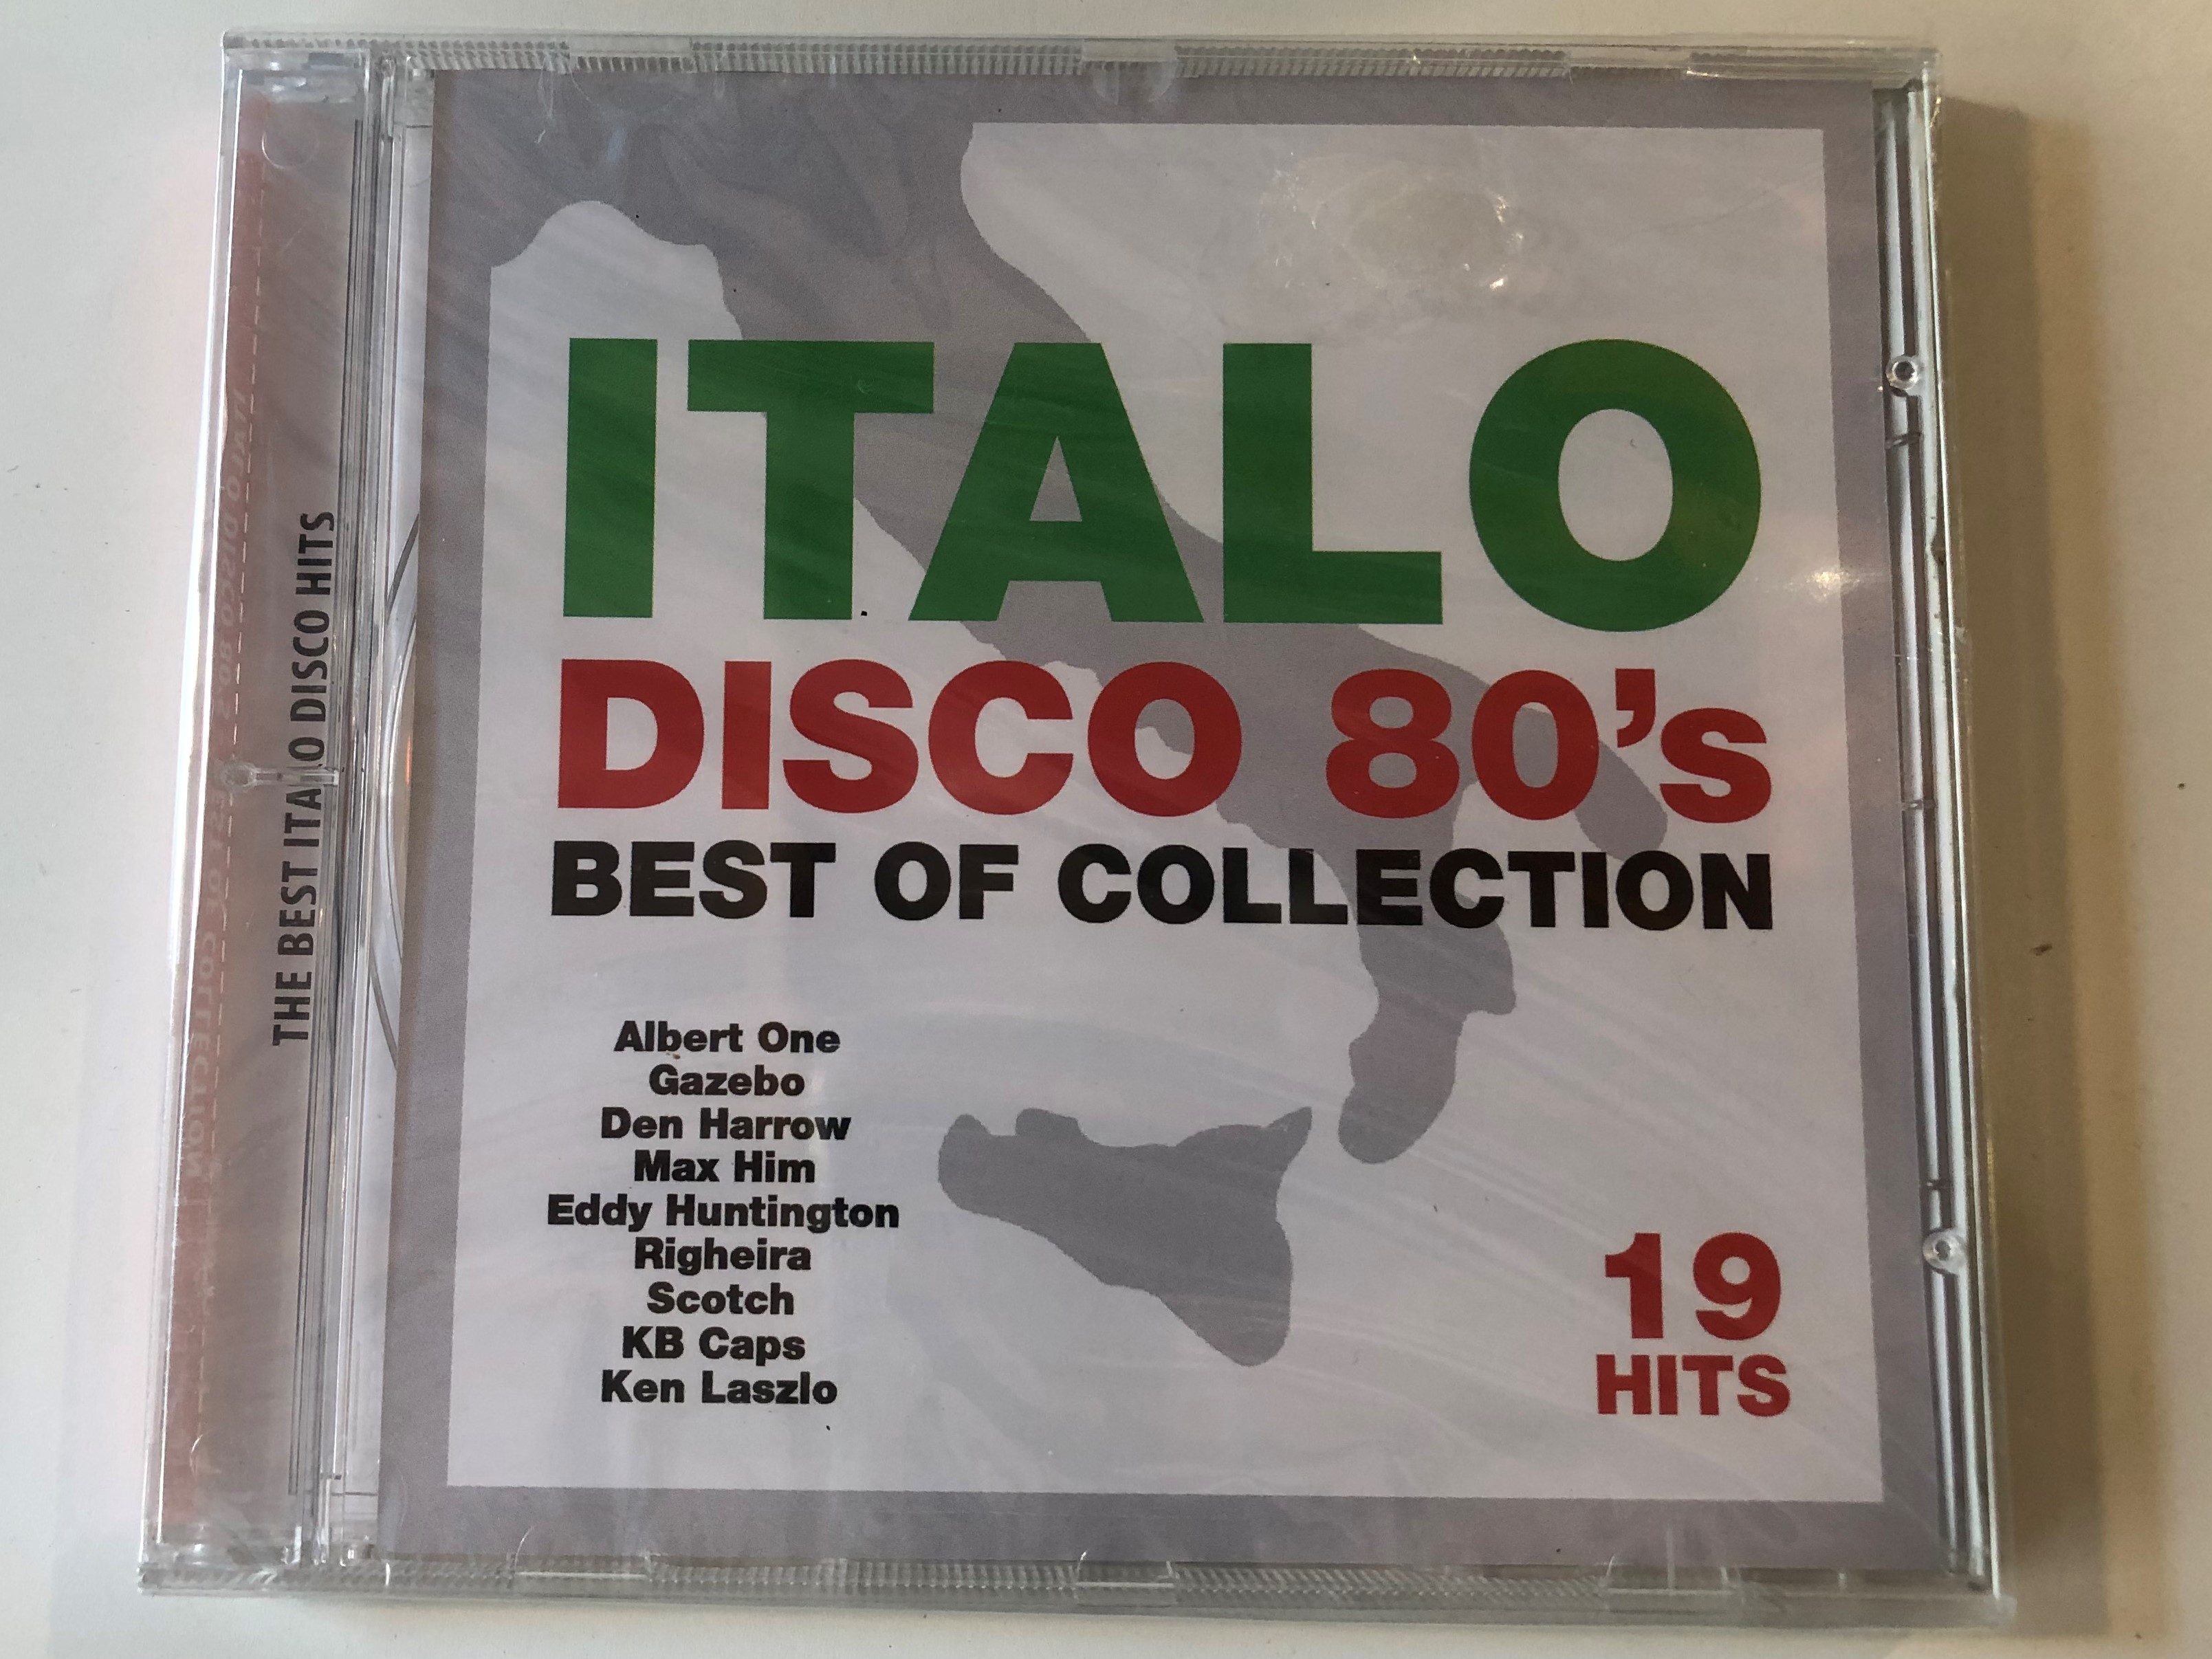 italo-disco-80-s-best-of-collection-albert-one-gazebo-den-harrow-max-him-eddy-huntington-righeira-scotch-kb-caps-ken-laszlo-19-hits-frontline-productions-records-audio-cd-fl044-1-.jpg